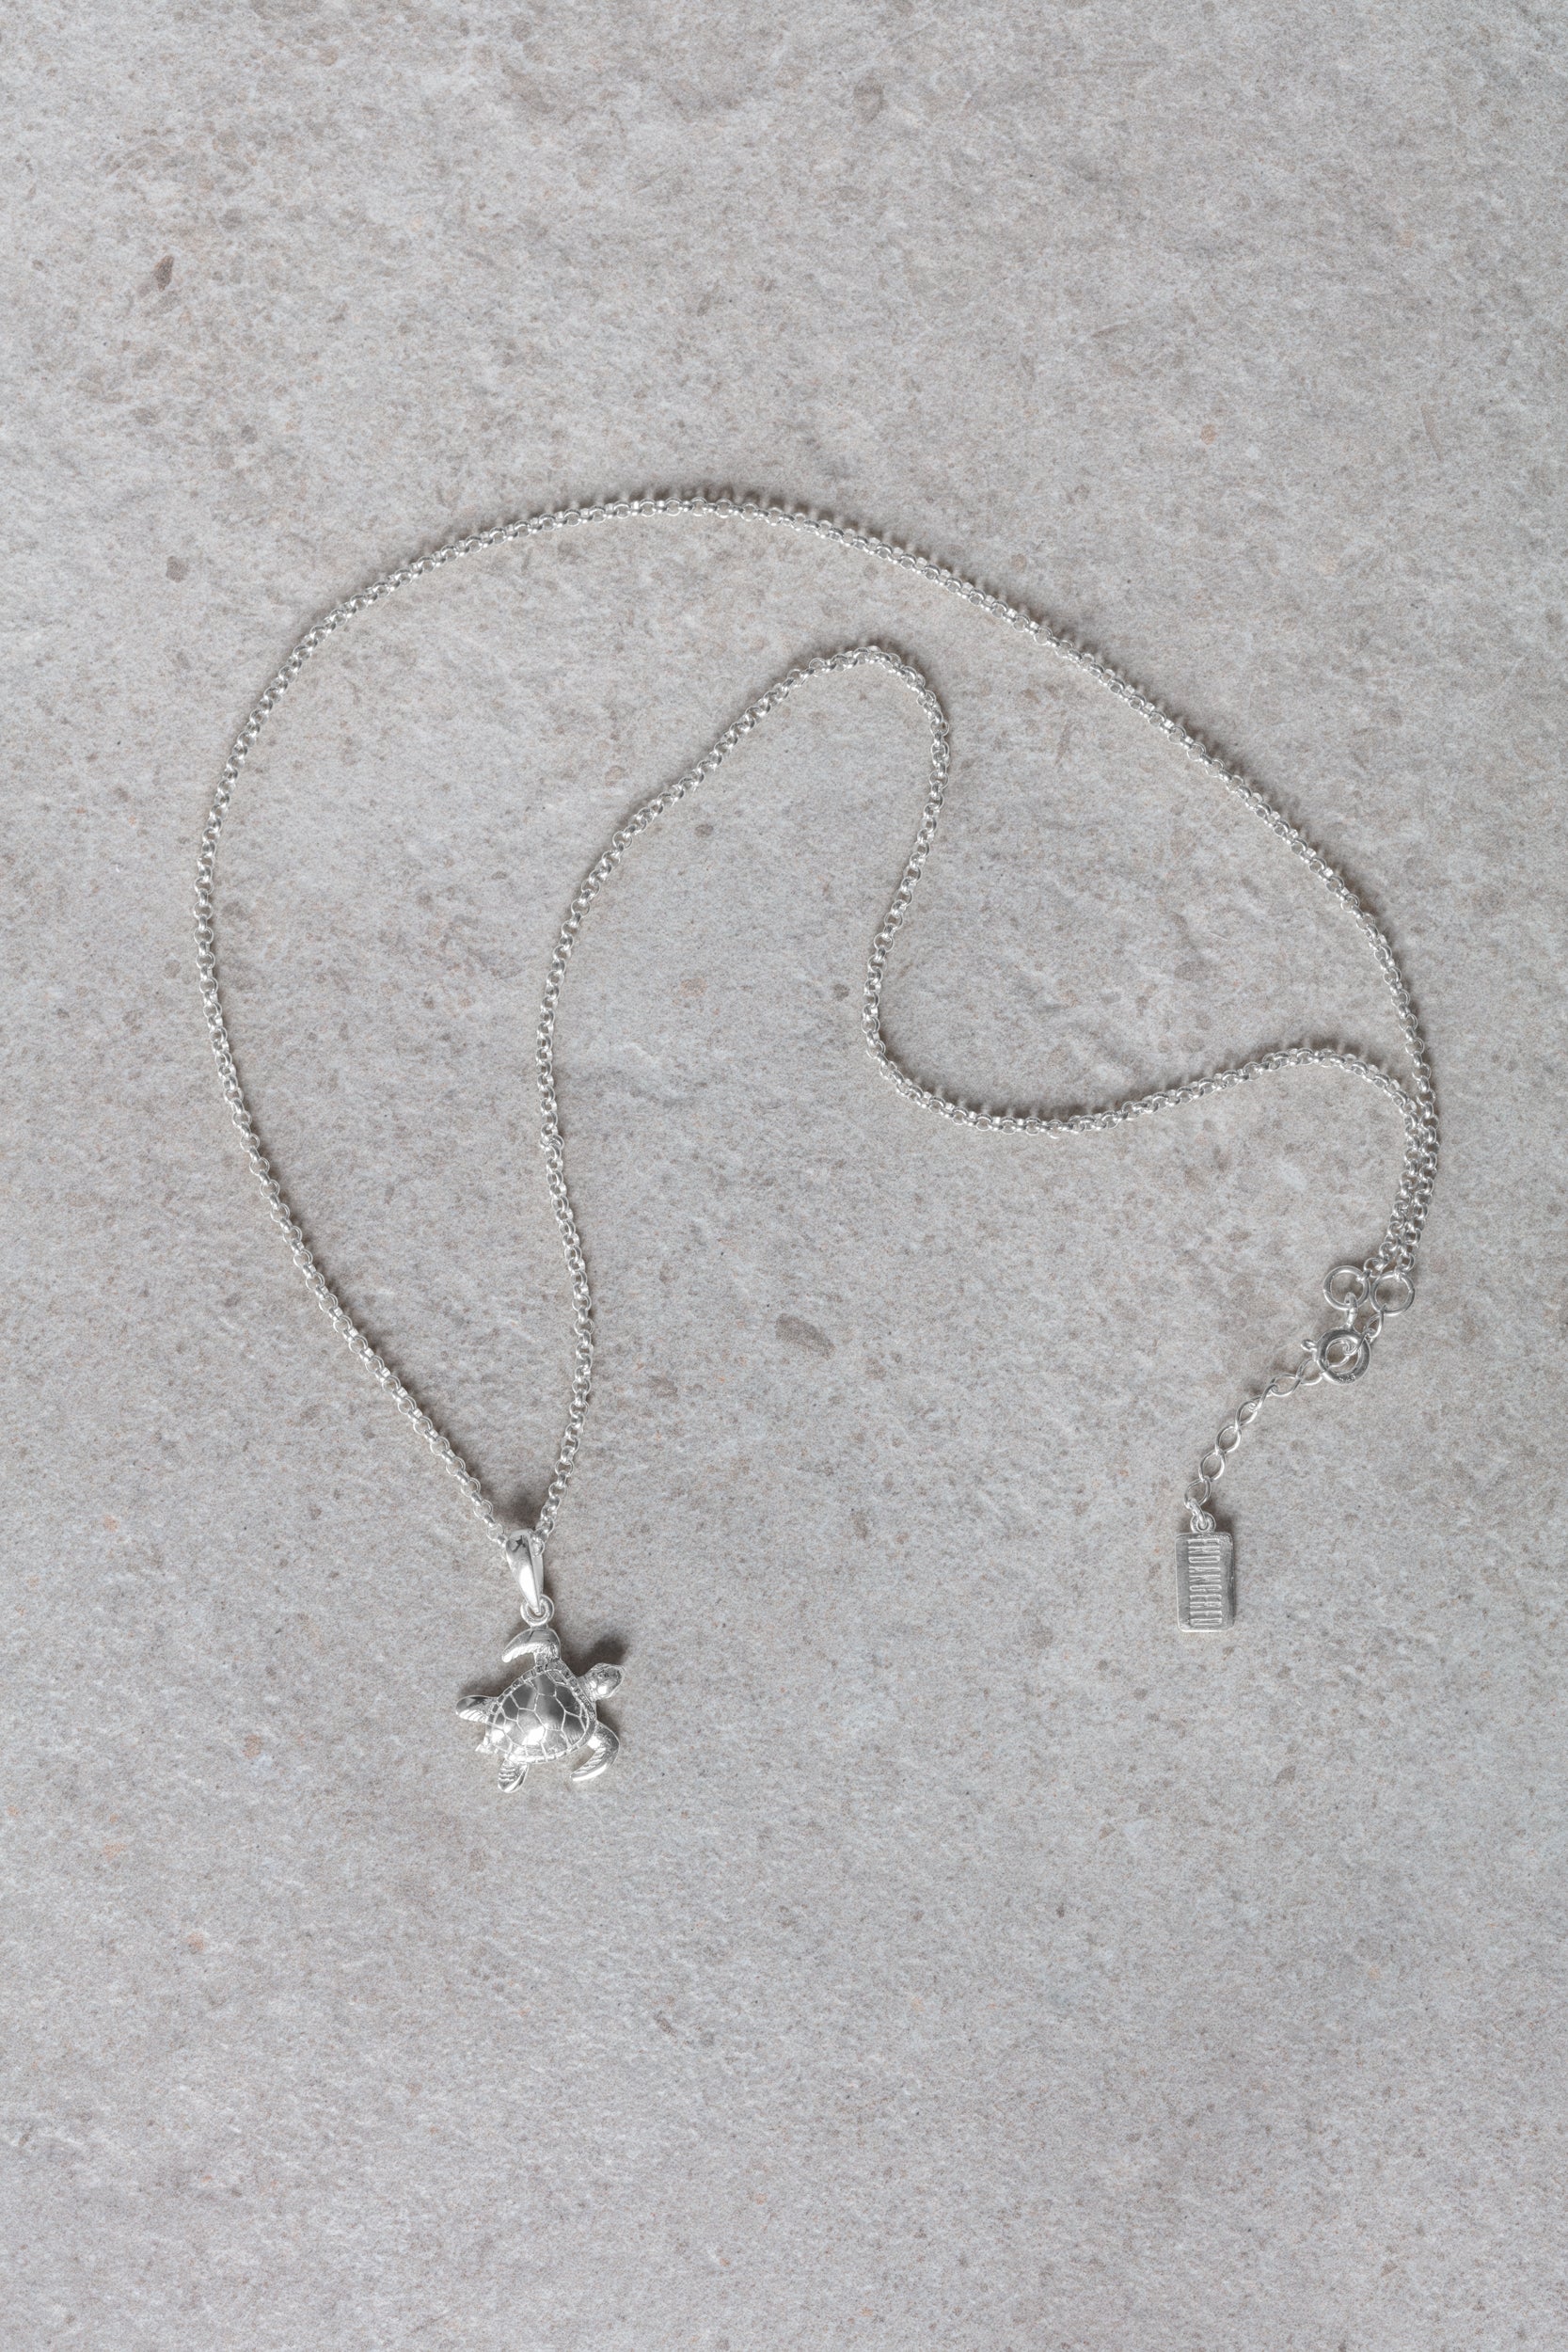 Hawksbill turtle necklace — Endangered Jewelry